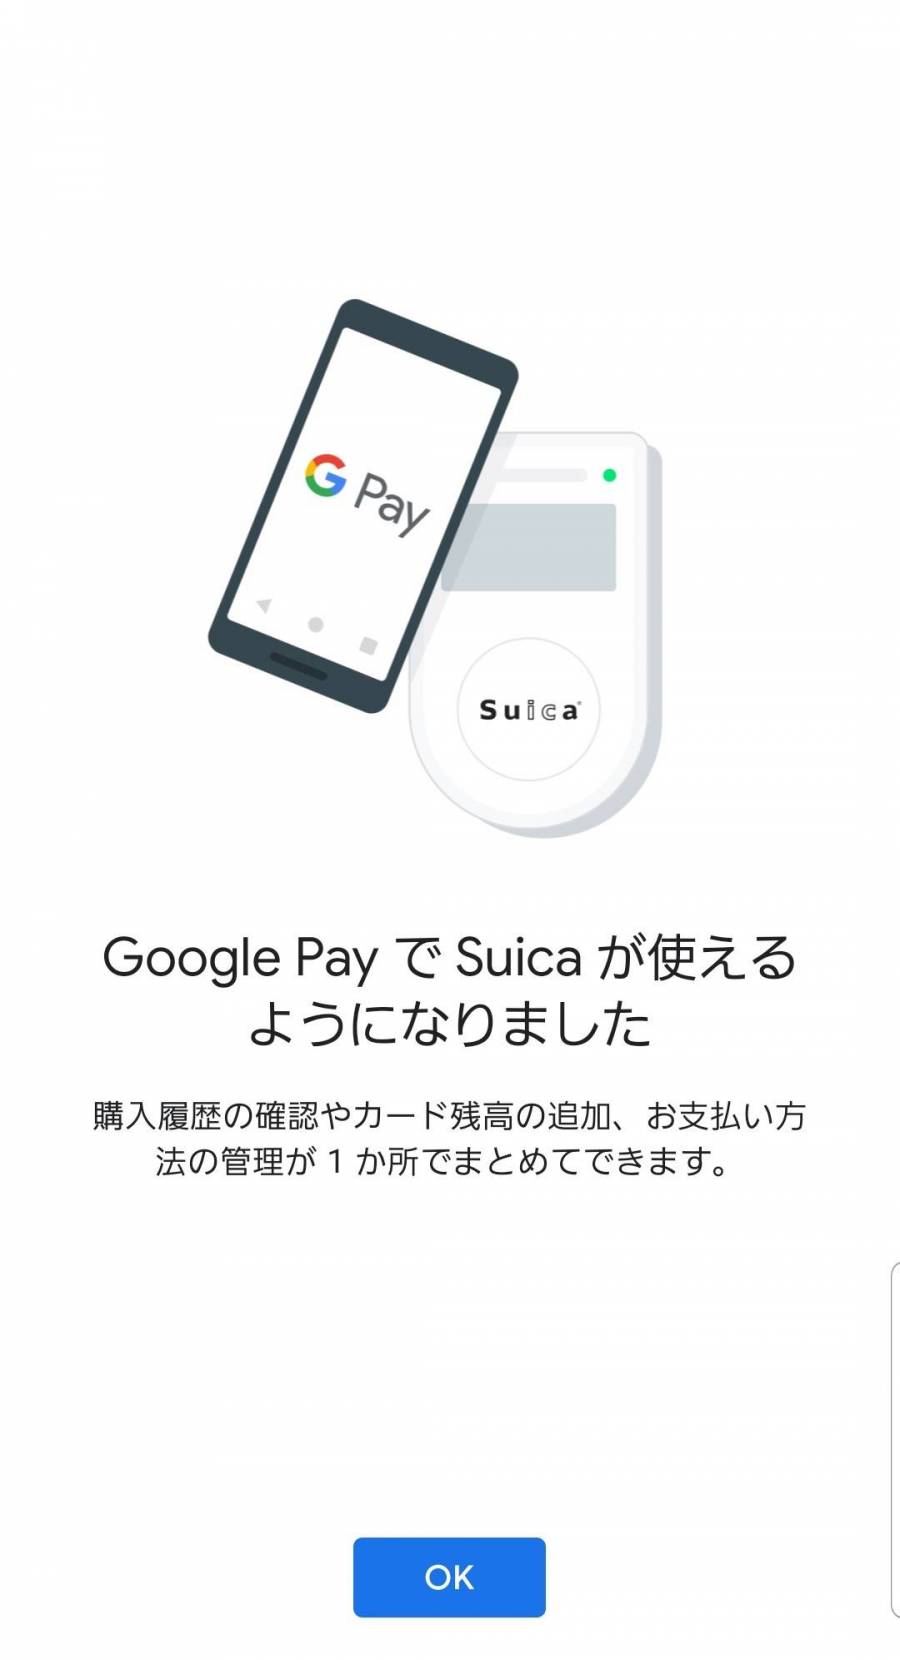 Google Pay Suica